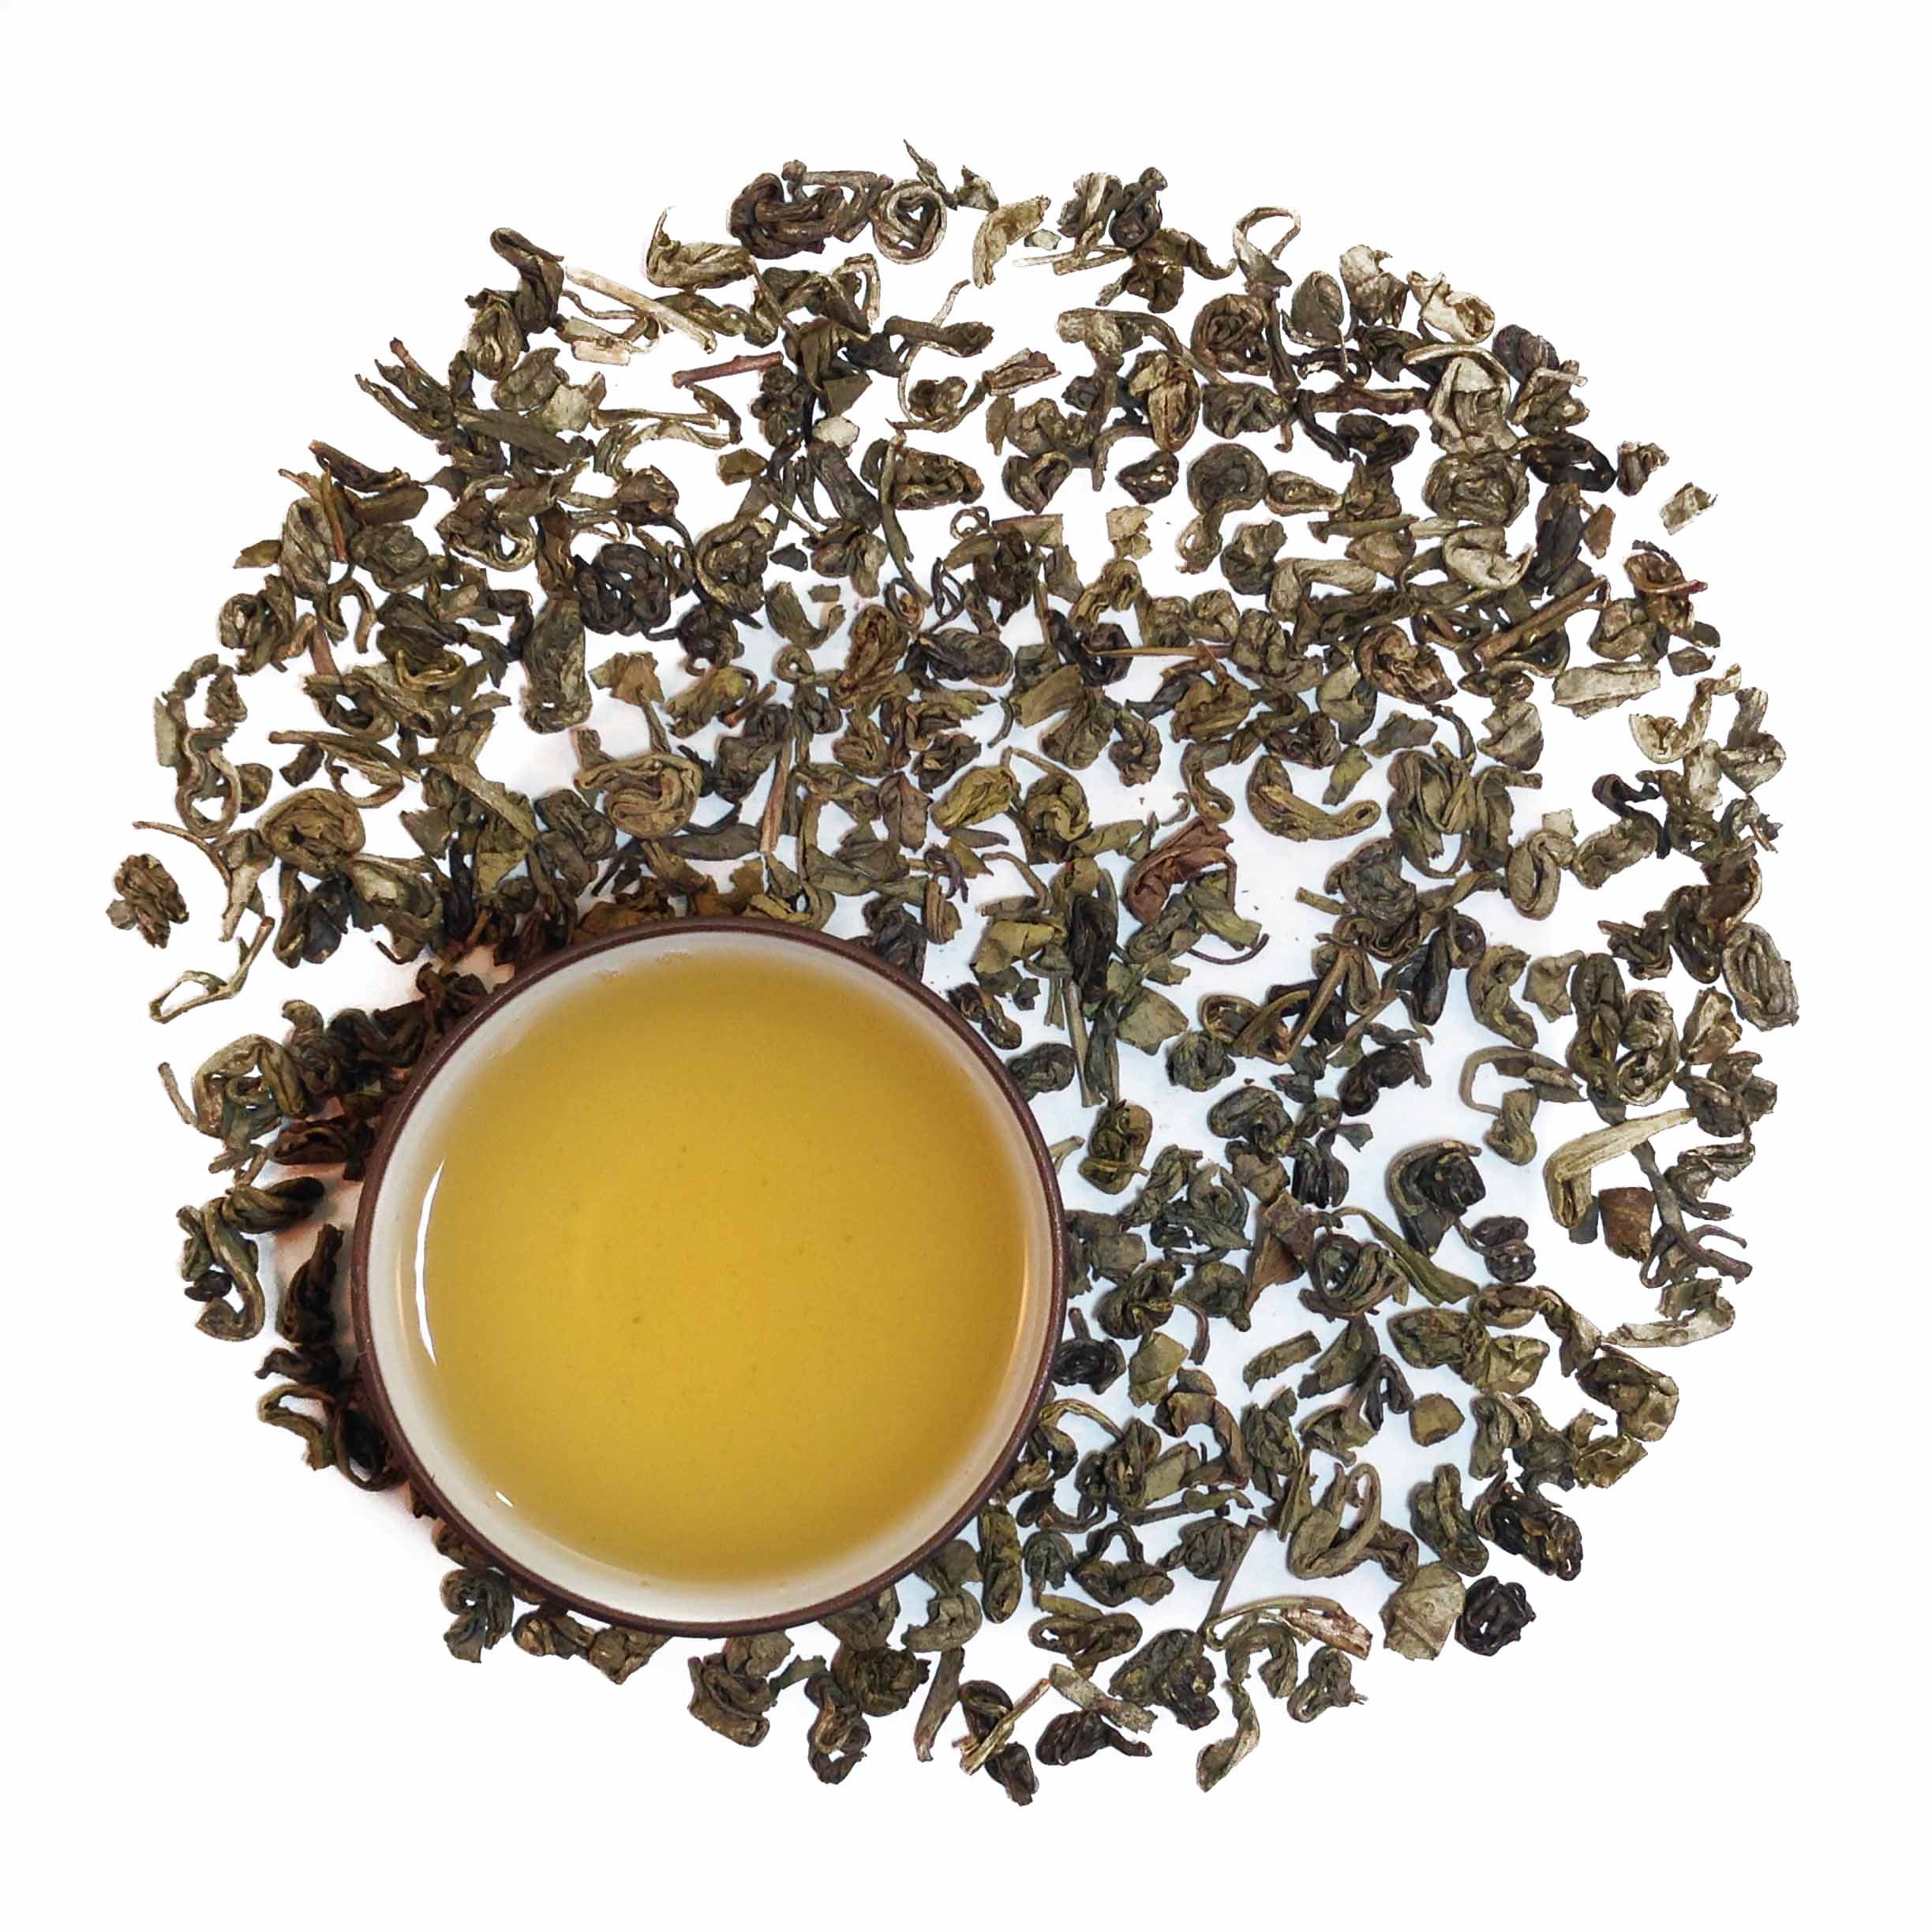 Gunpowder Green Tea (Organic)